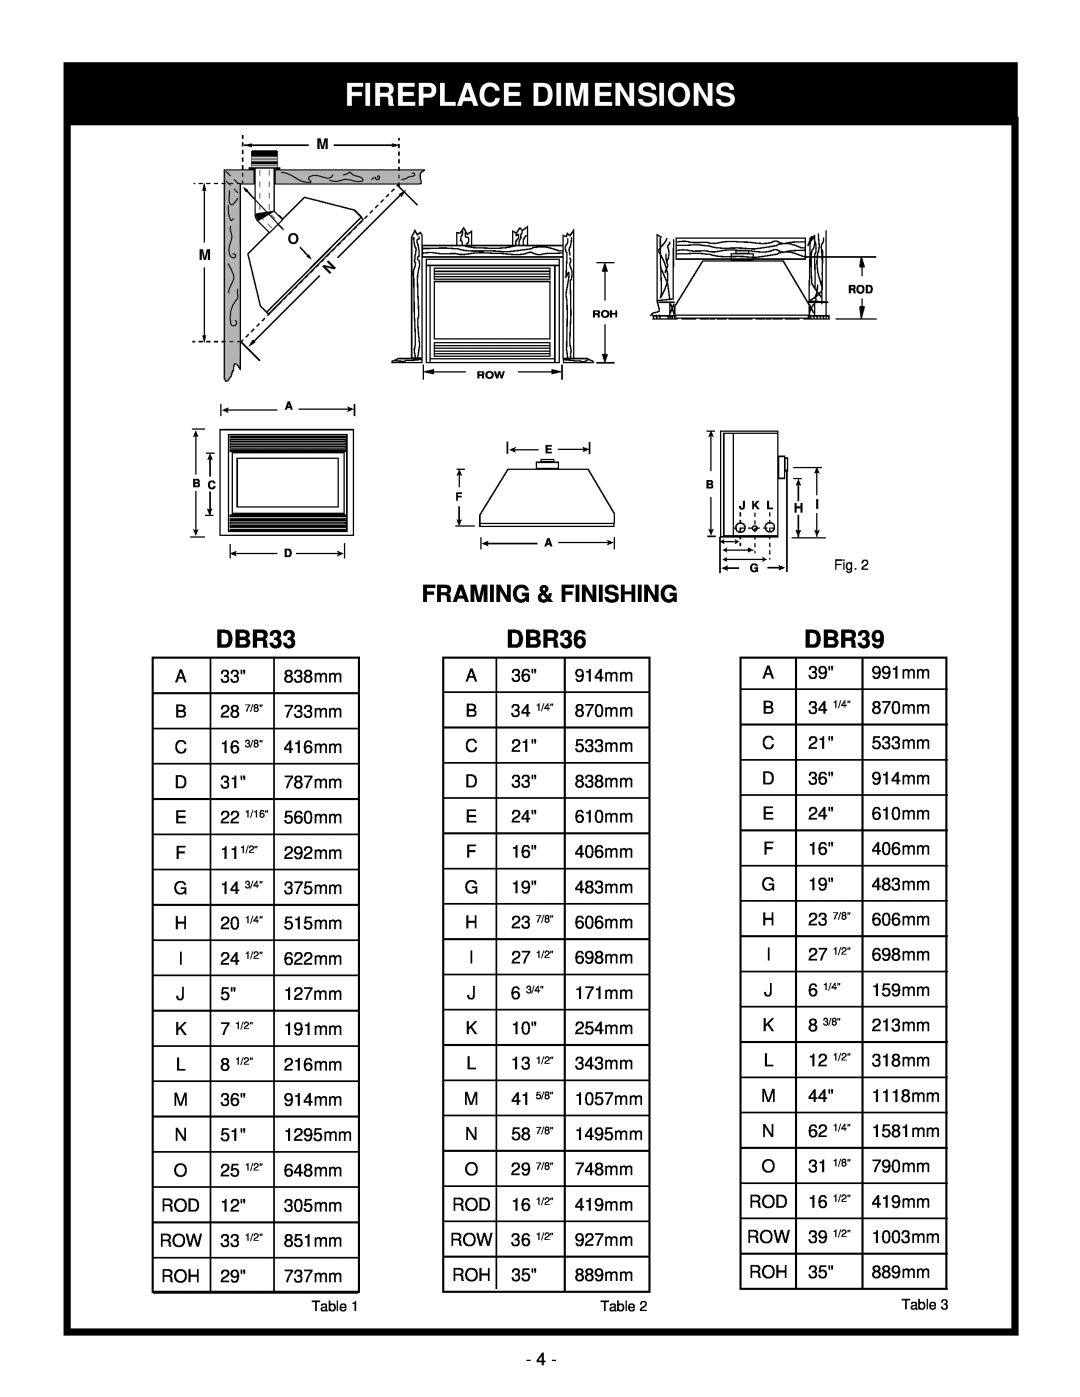 Vermont Casting DBR33 installation instructions Fireplace Dimensions, DBR36, DBR39, Framing & Finishing 